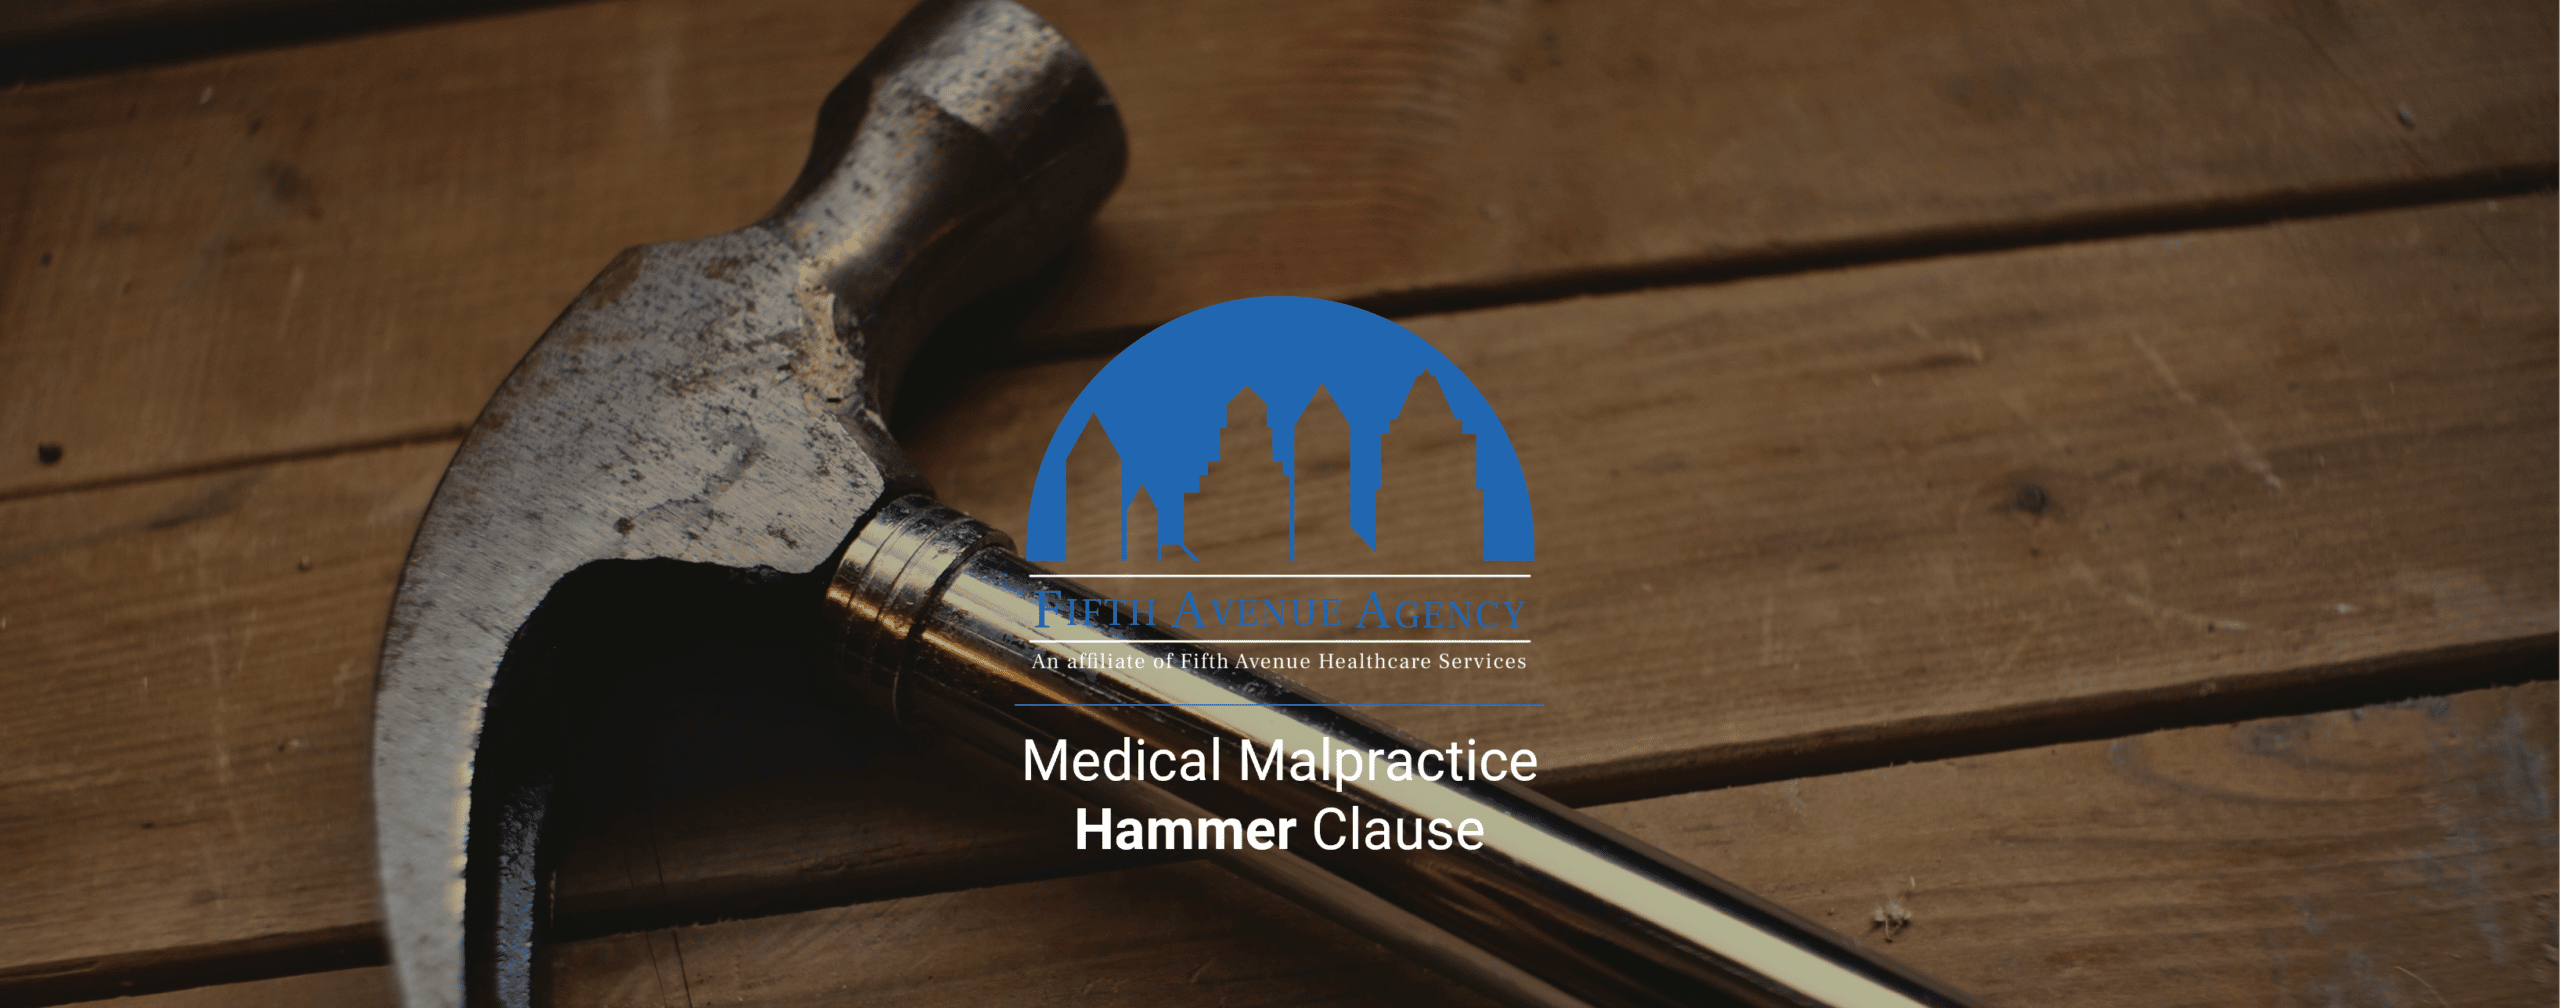 Medical Malpractice Hammer Clause